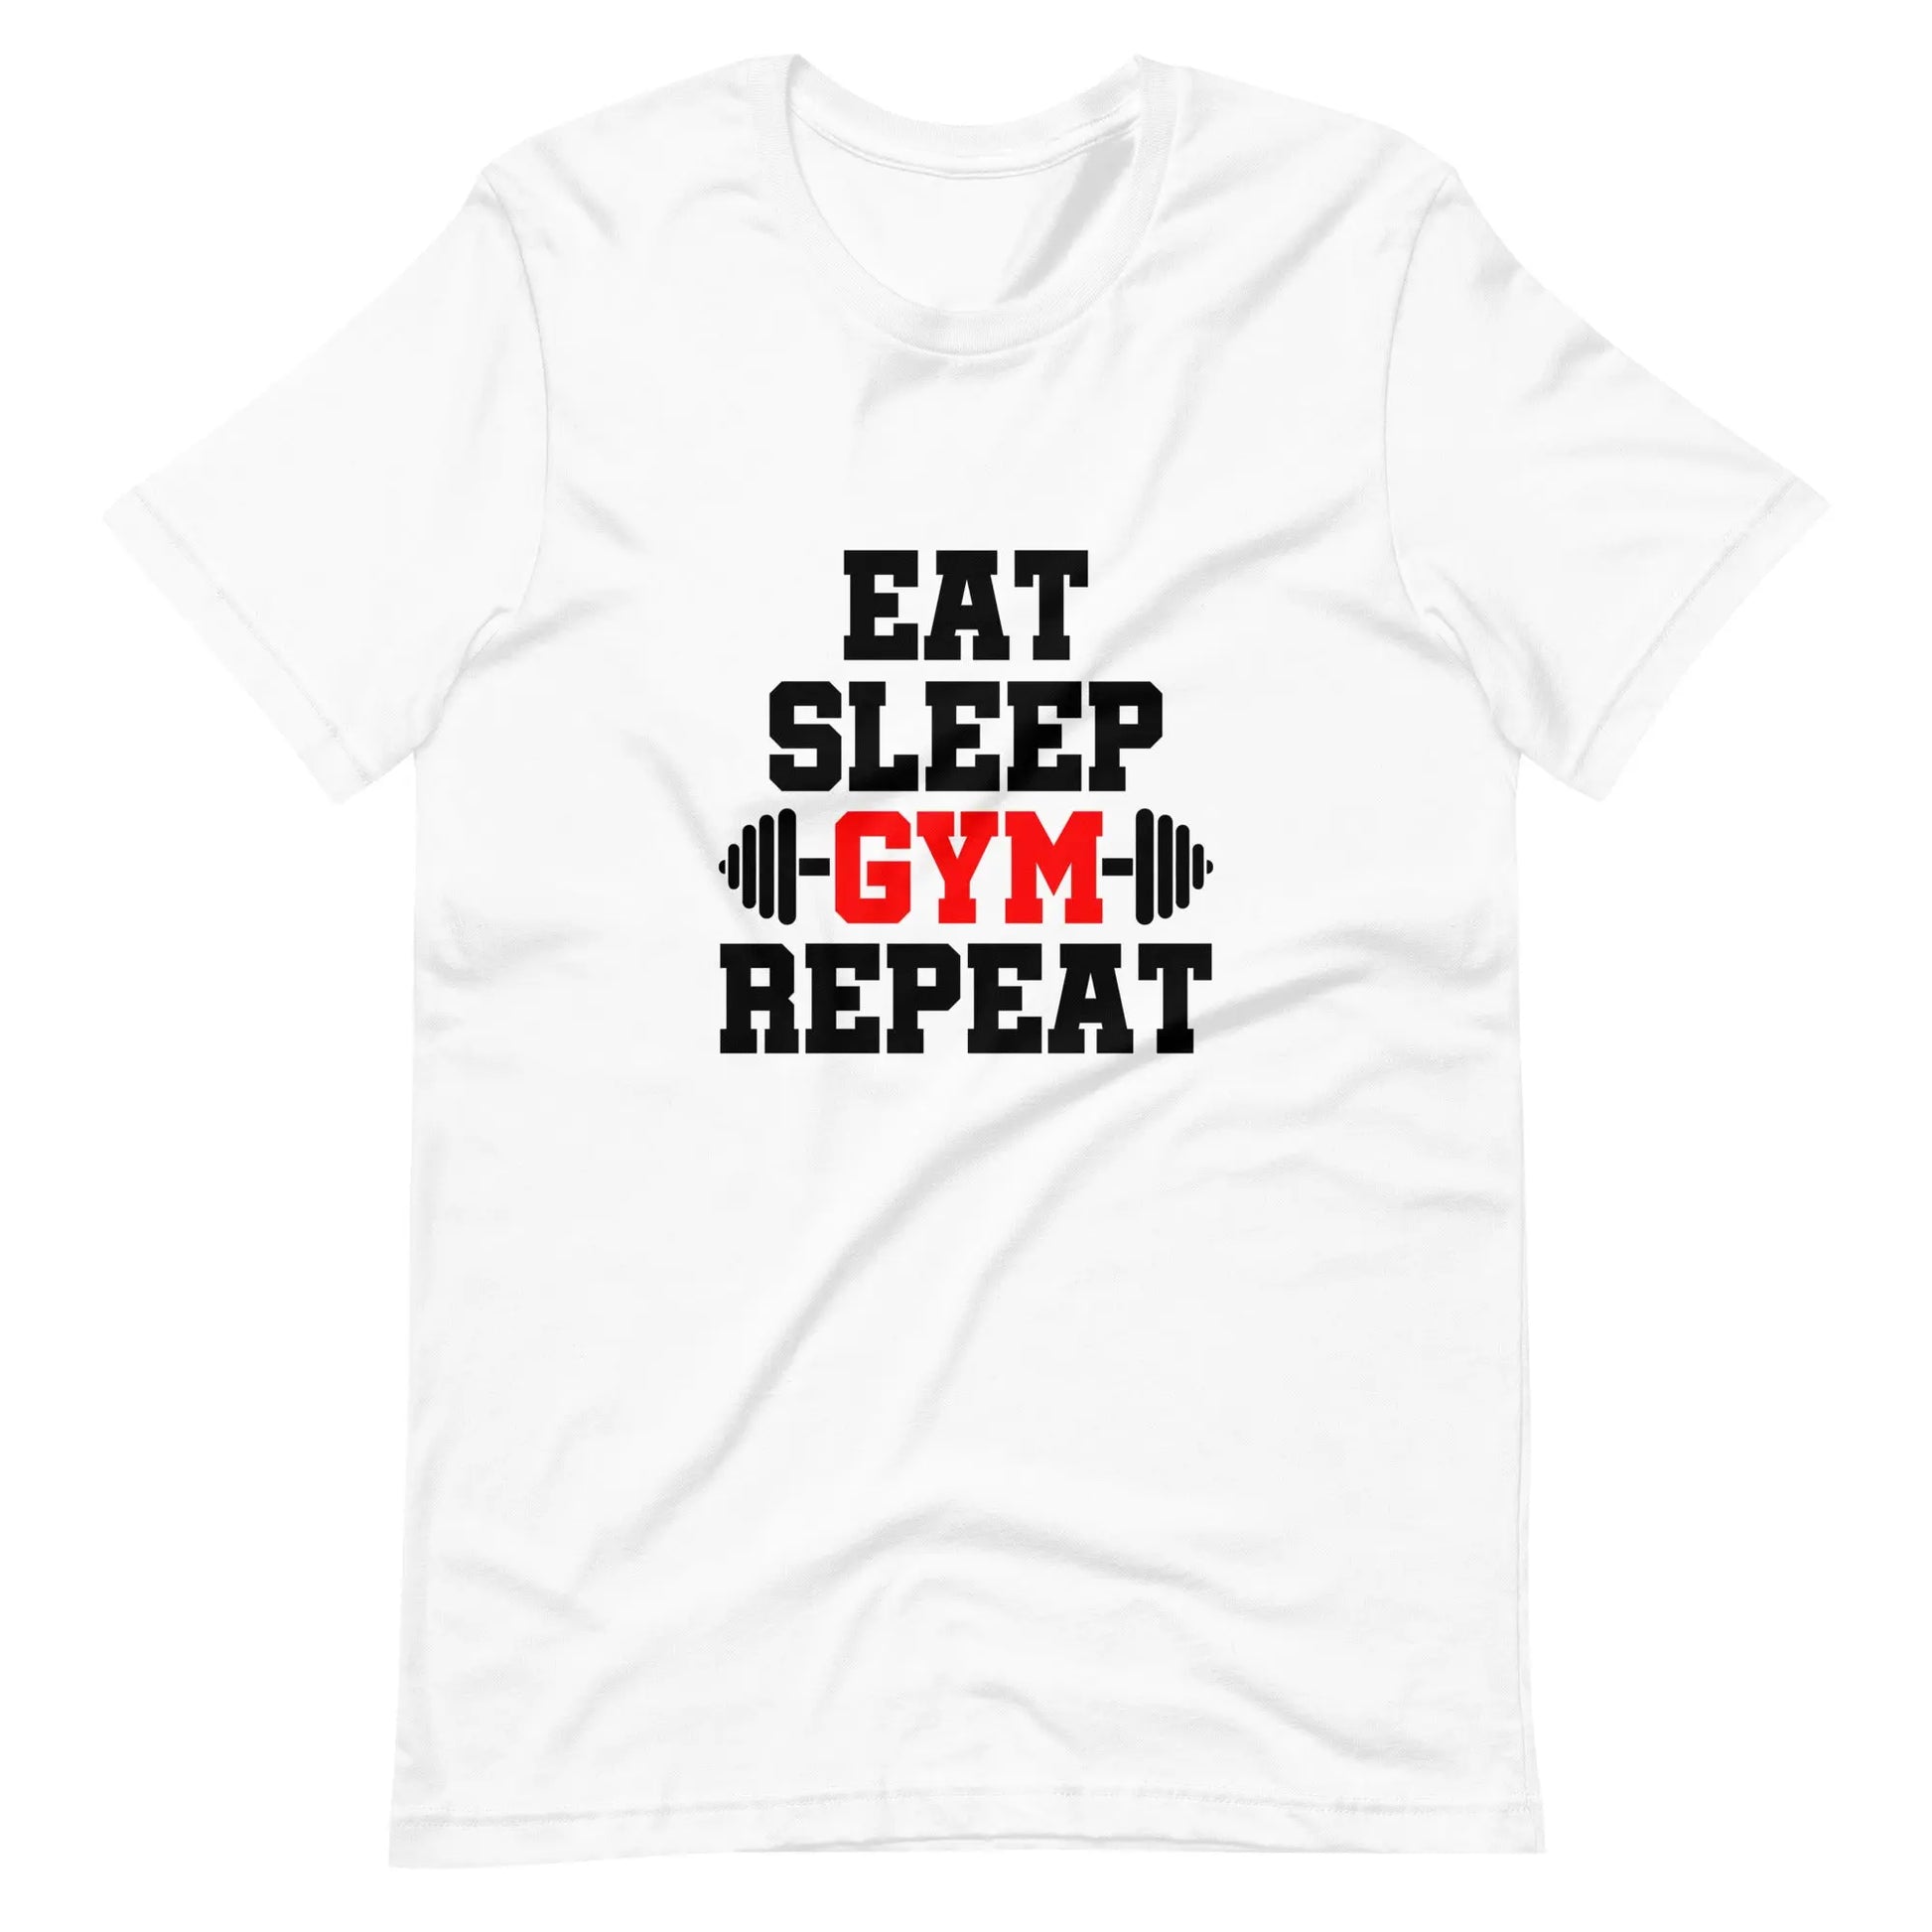 Gym Motivation T-Shirt | The Workout Inspiration |Eat Sleep Gym Repeat Tee The Workout Inspiration